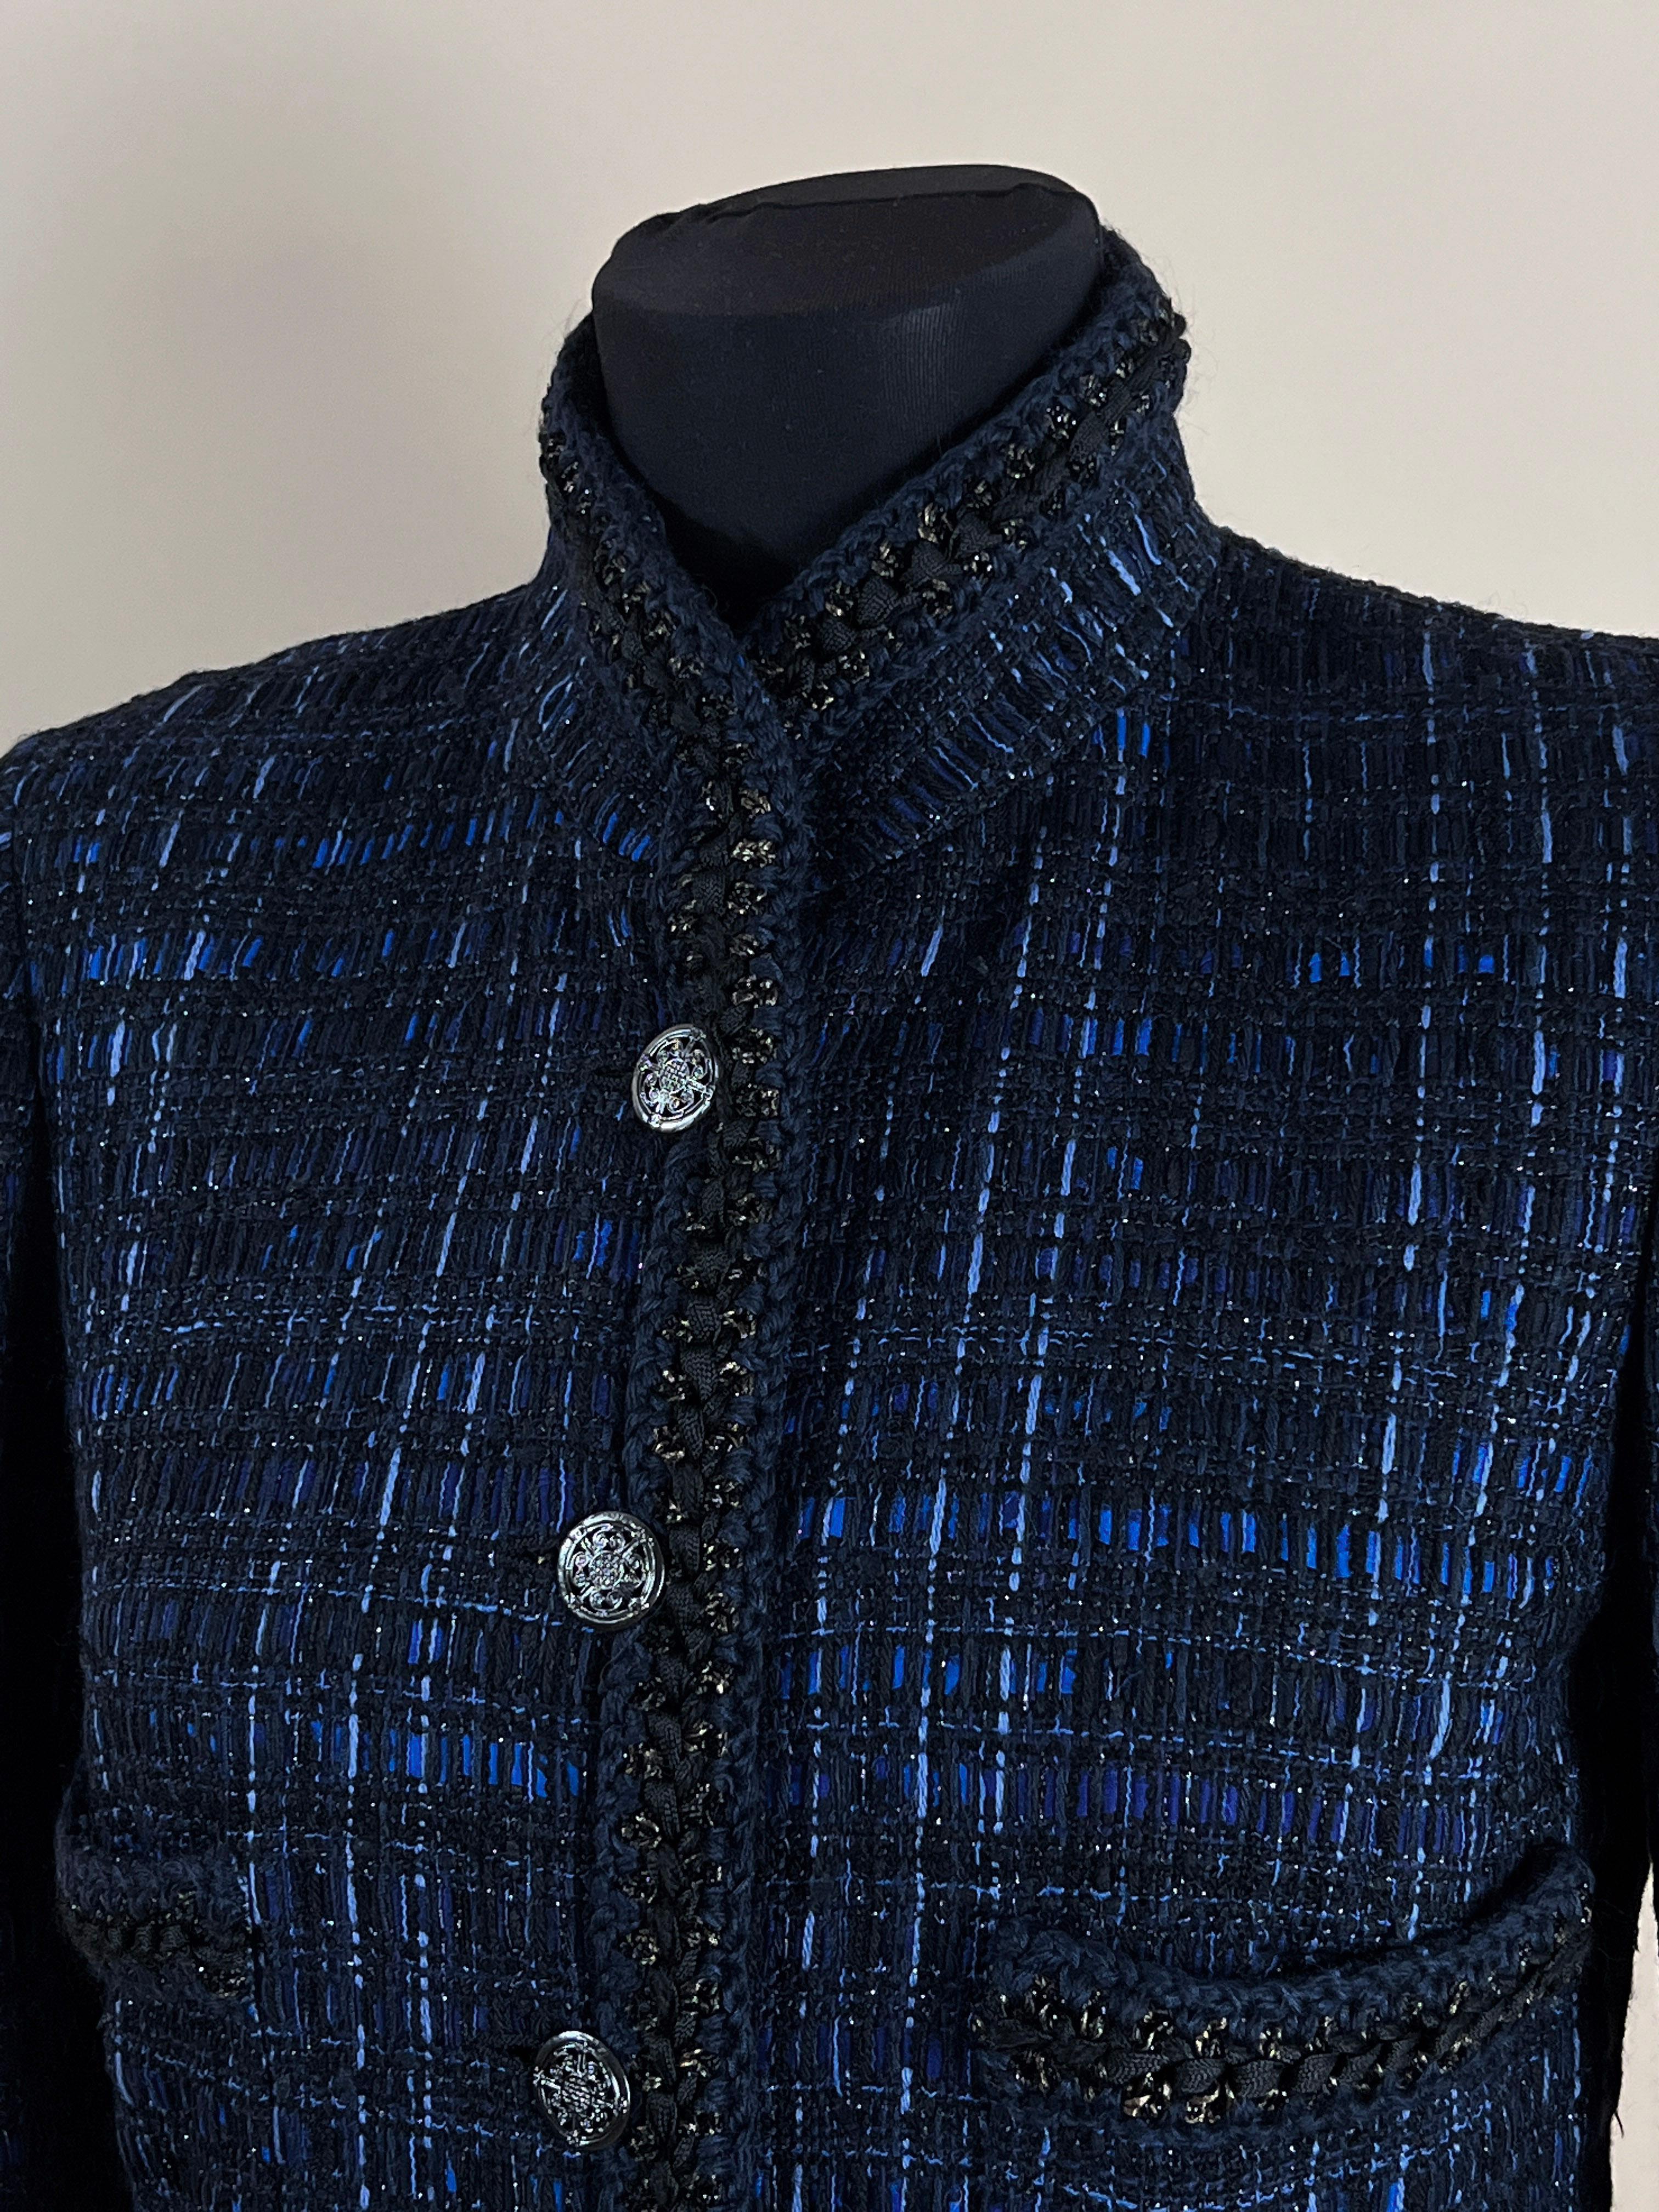 Chanel Shanghai Collection Ribbon Tweed Jacket, 2010 3